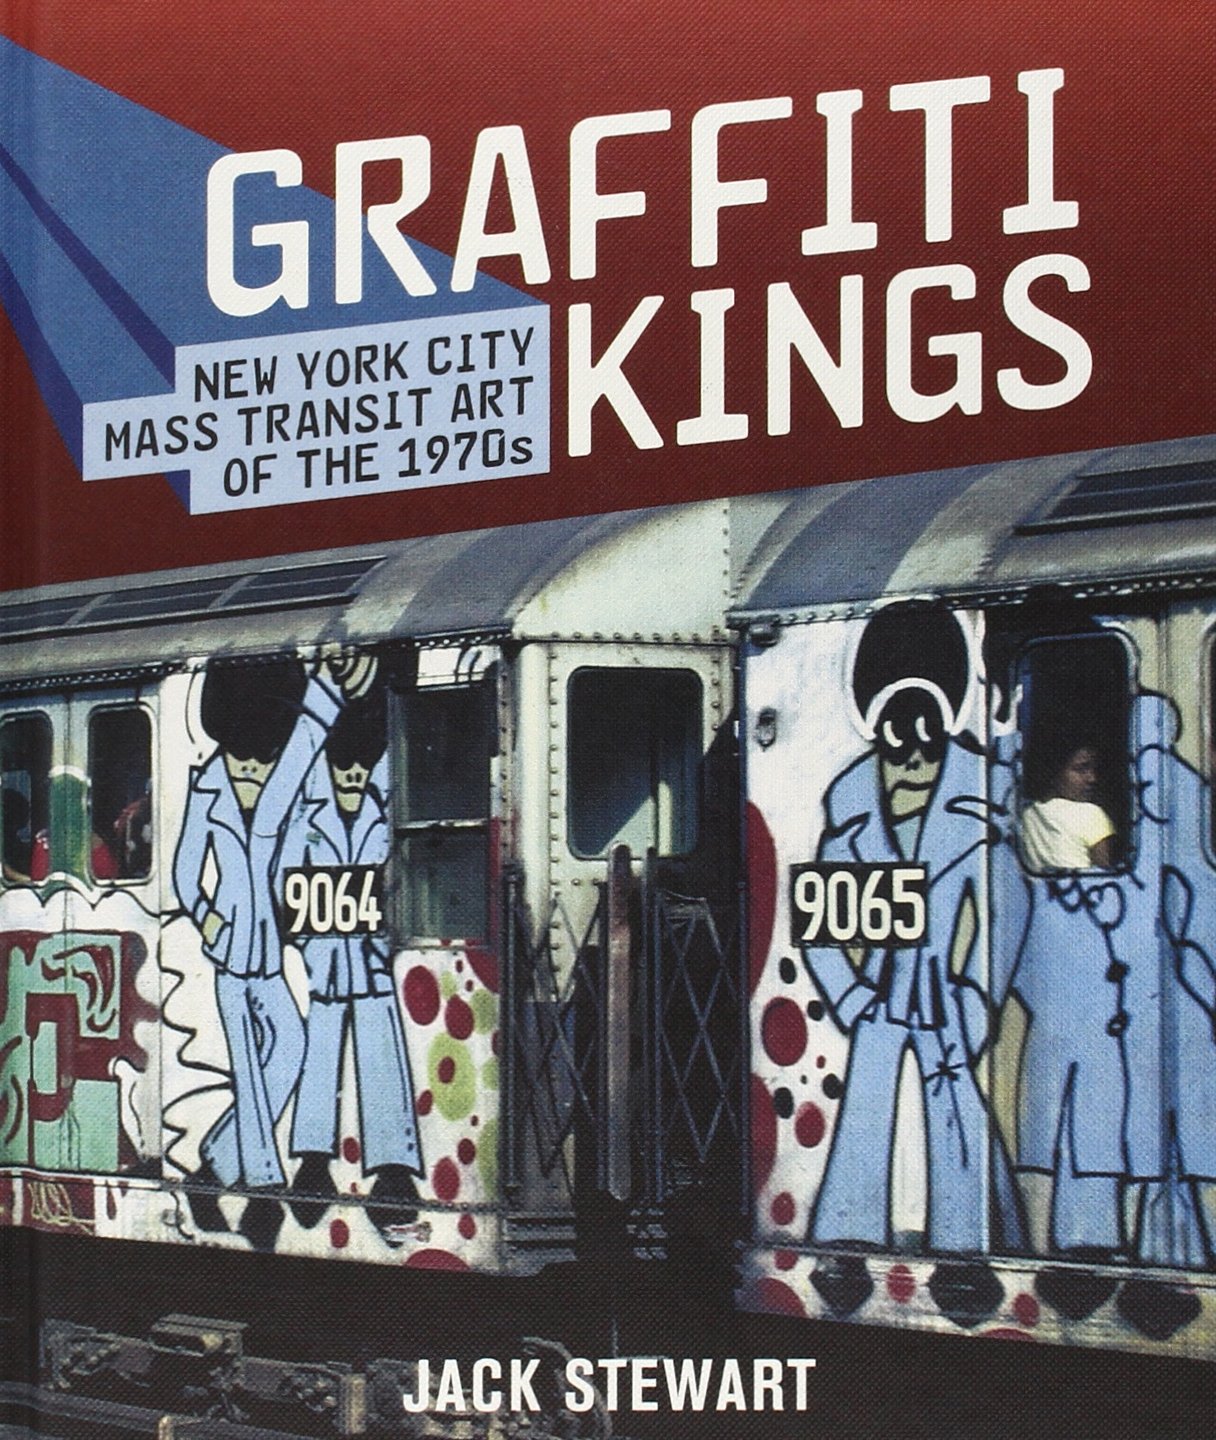 Graffiti Kings: New York City Mass Transit Art of the 1970's Hardcover – May 1, 2009